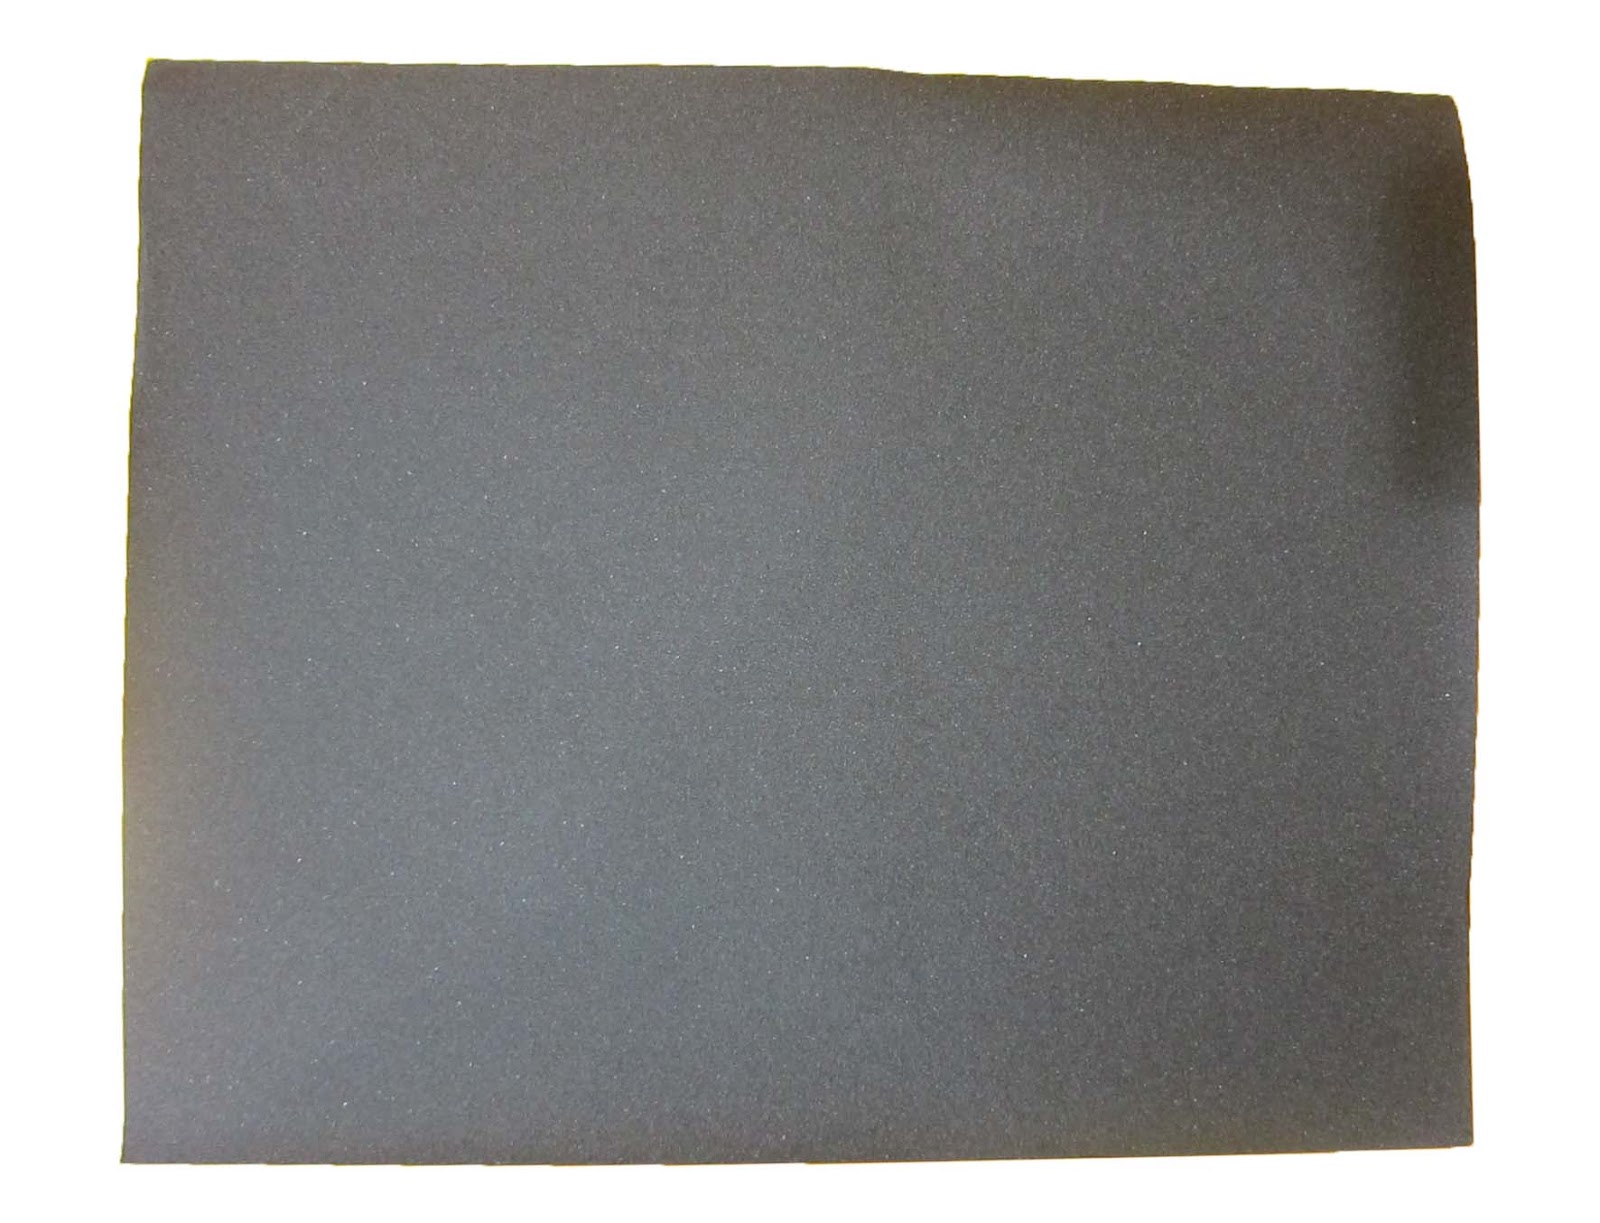  Silicon Carbide Waterproof Paper -Silicon Carbide Waterproof Abrasive Paper